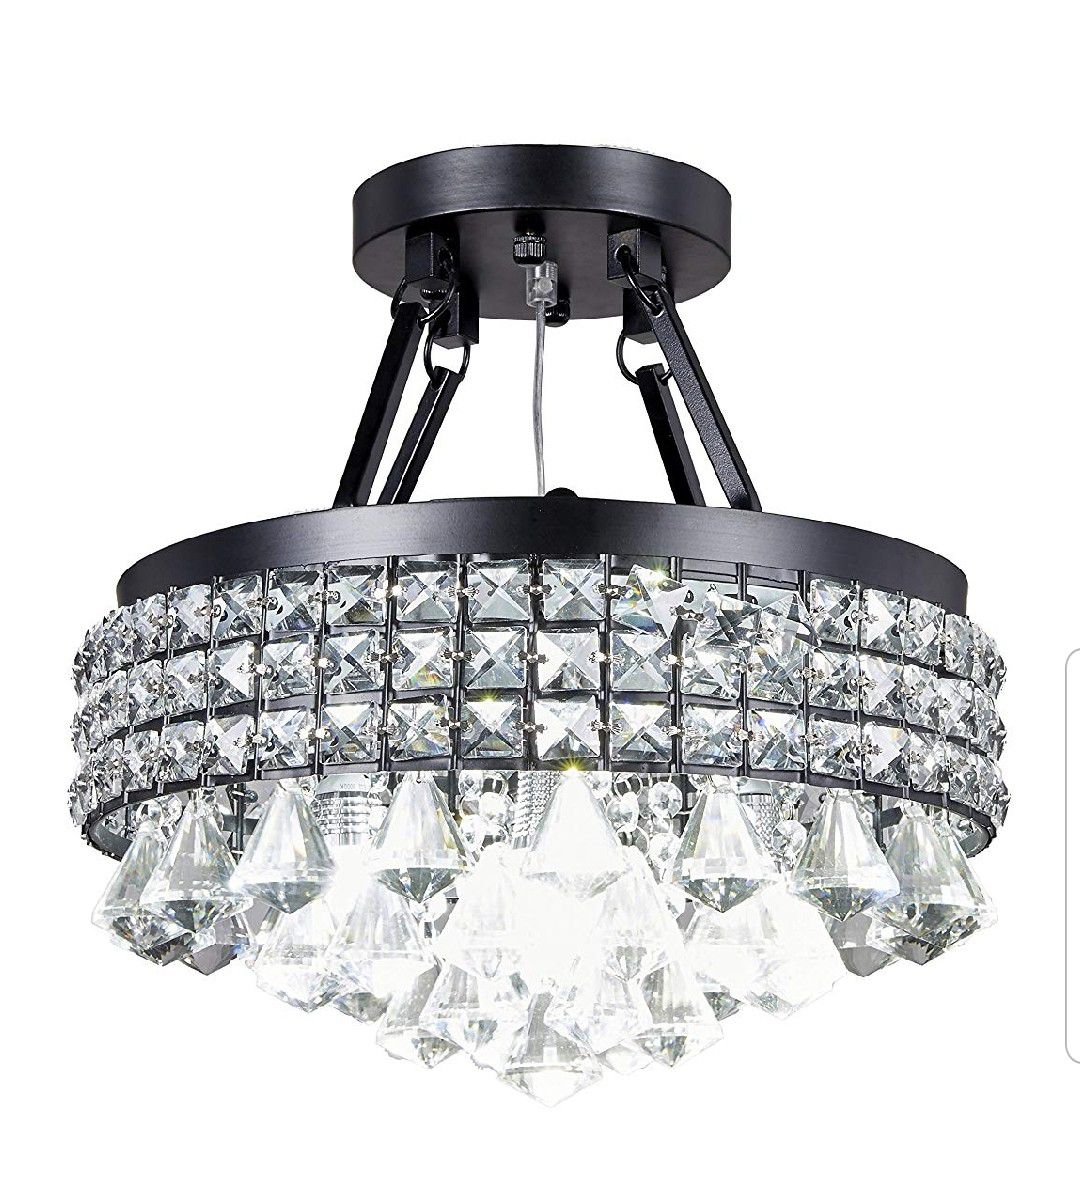 Chrystal chandelier light fixture